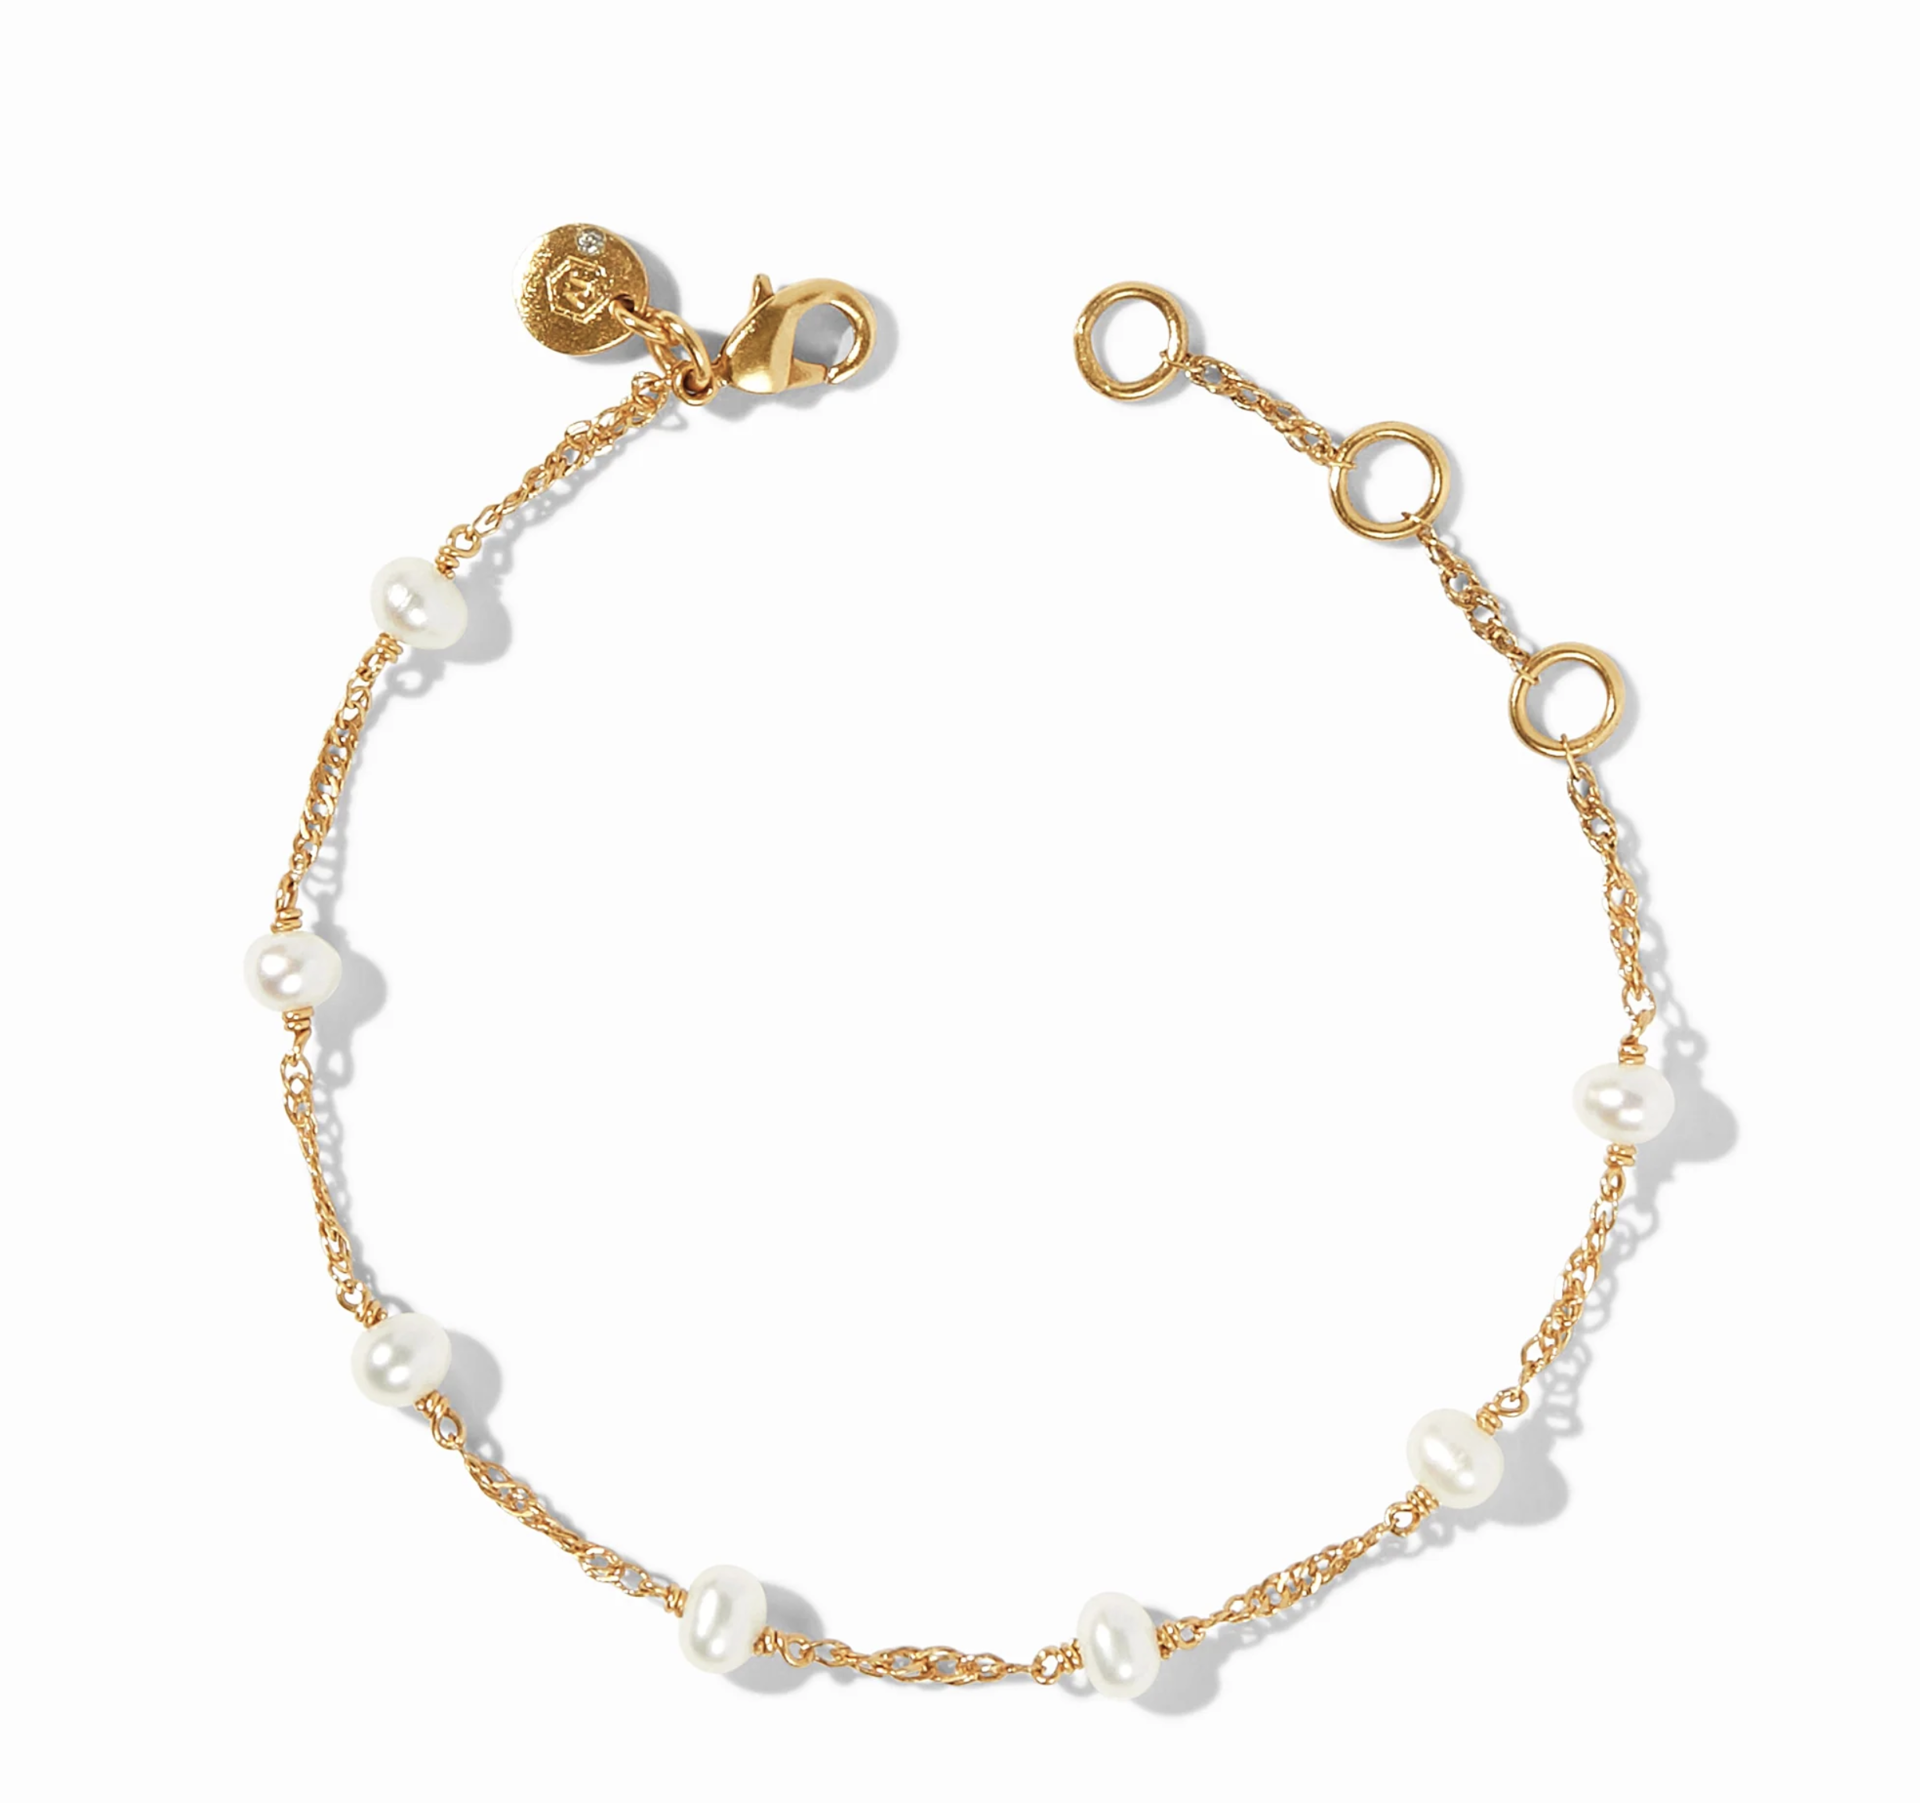 Charlotte Pearl Delicate Bracelet by Julie Vos